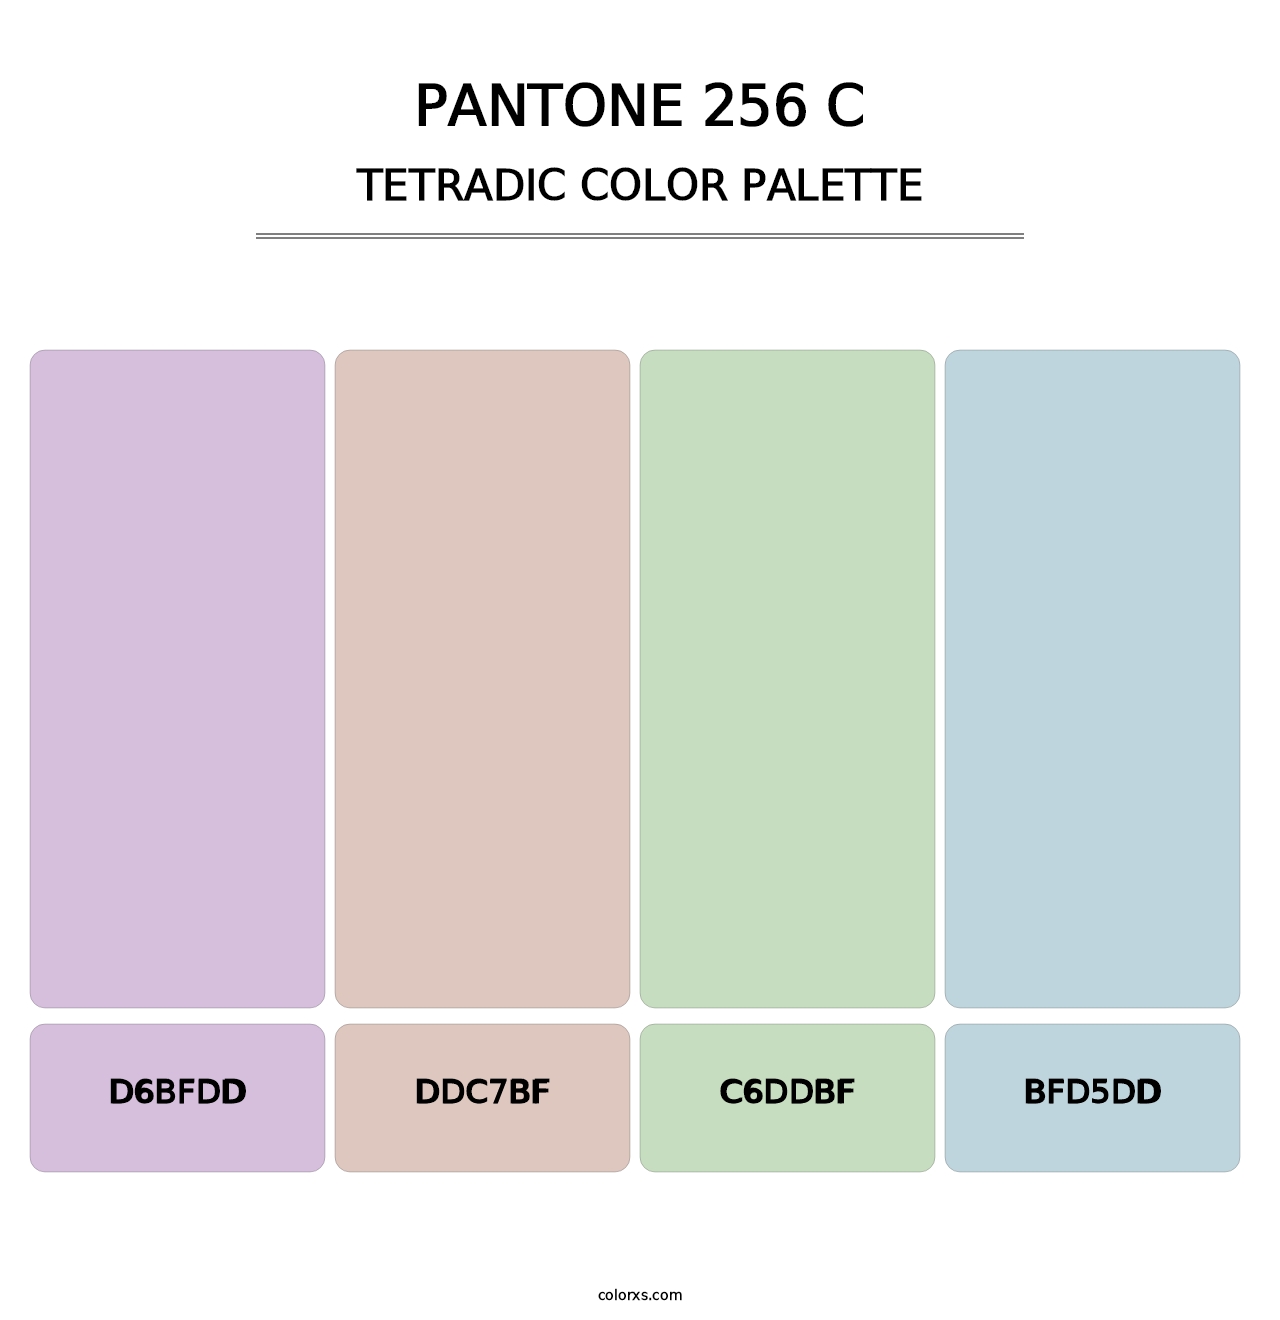 PANTONE 256 C - Tetradic Color Palette